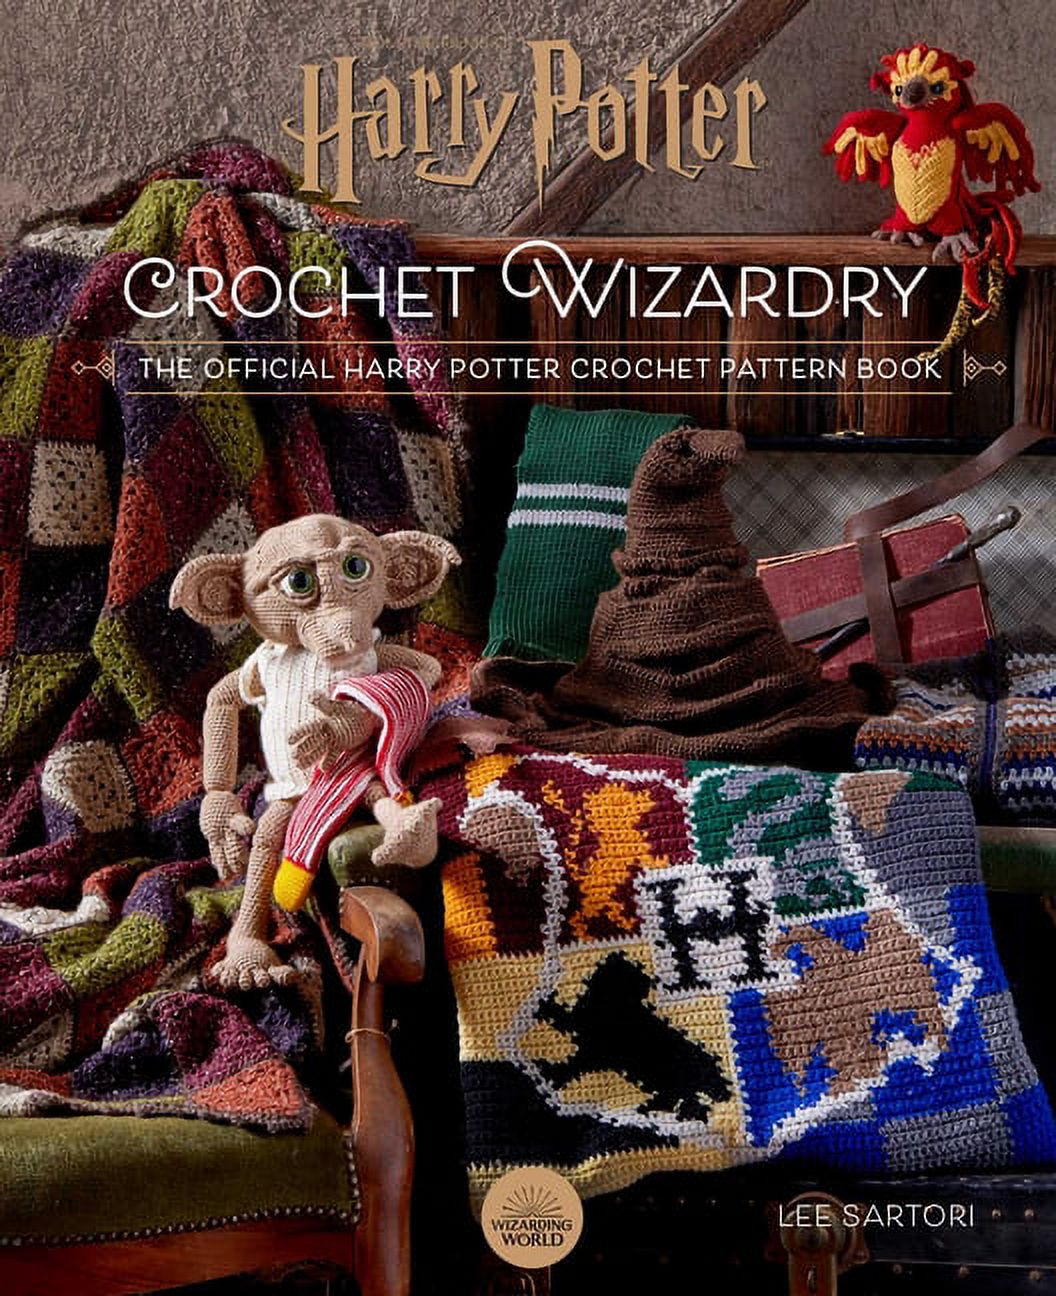 Harry Potter: Crochet Wizardry | Crochet Patterns | Harry Potter Crafts: The Official Harry Potter Crochet Pattern Book [Book]